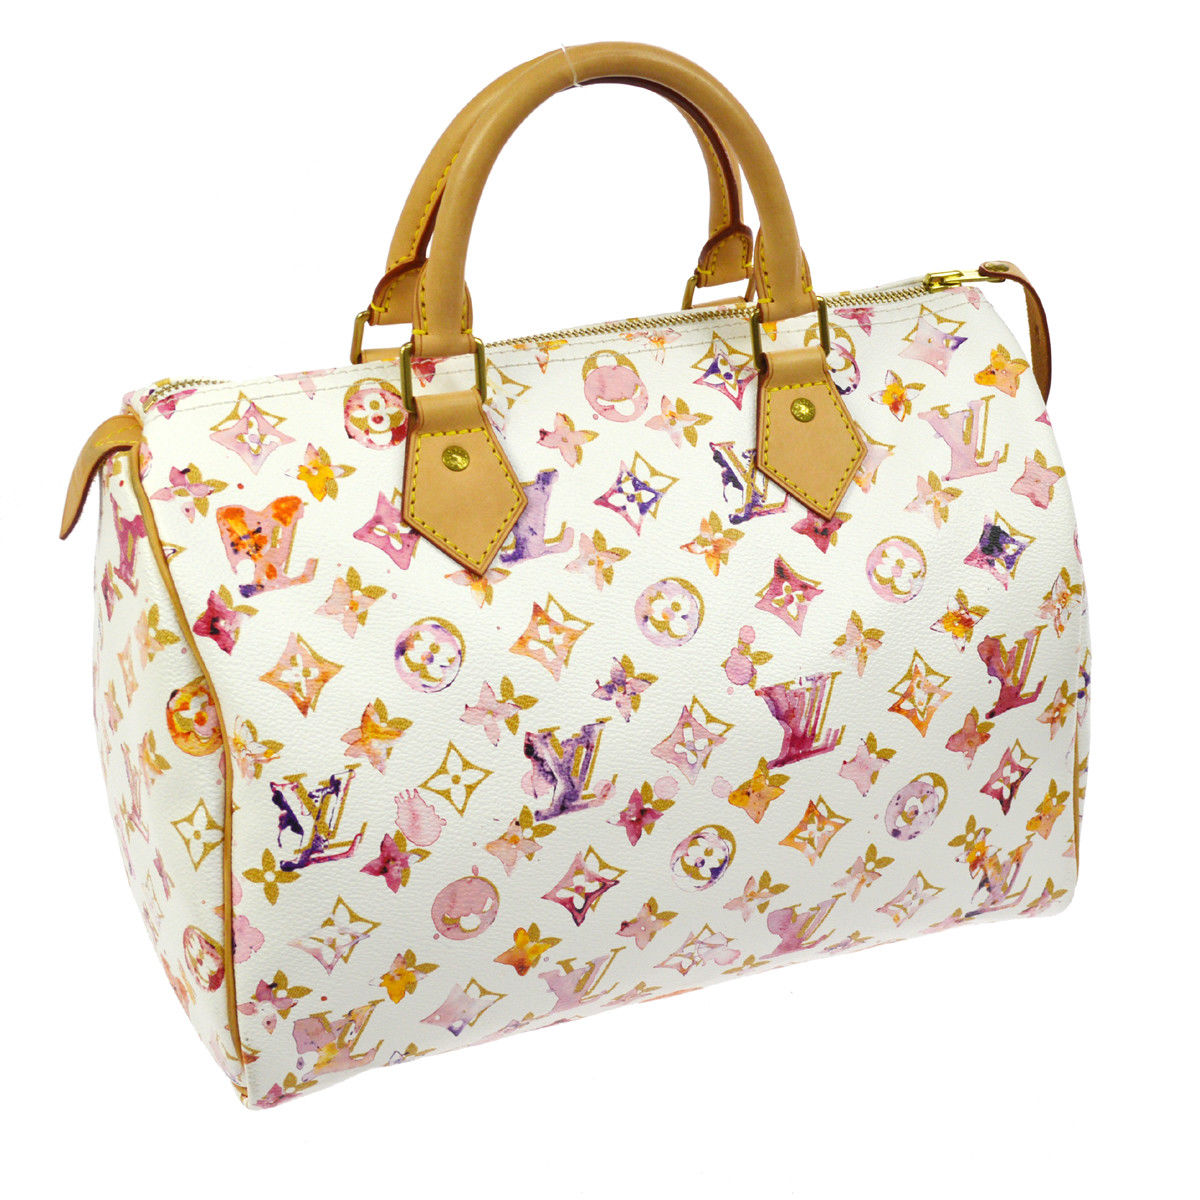 Top 10 Pink Luxury Designer Handbags from Louis Vuitton, Hermes, Dior